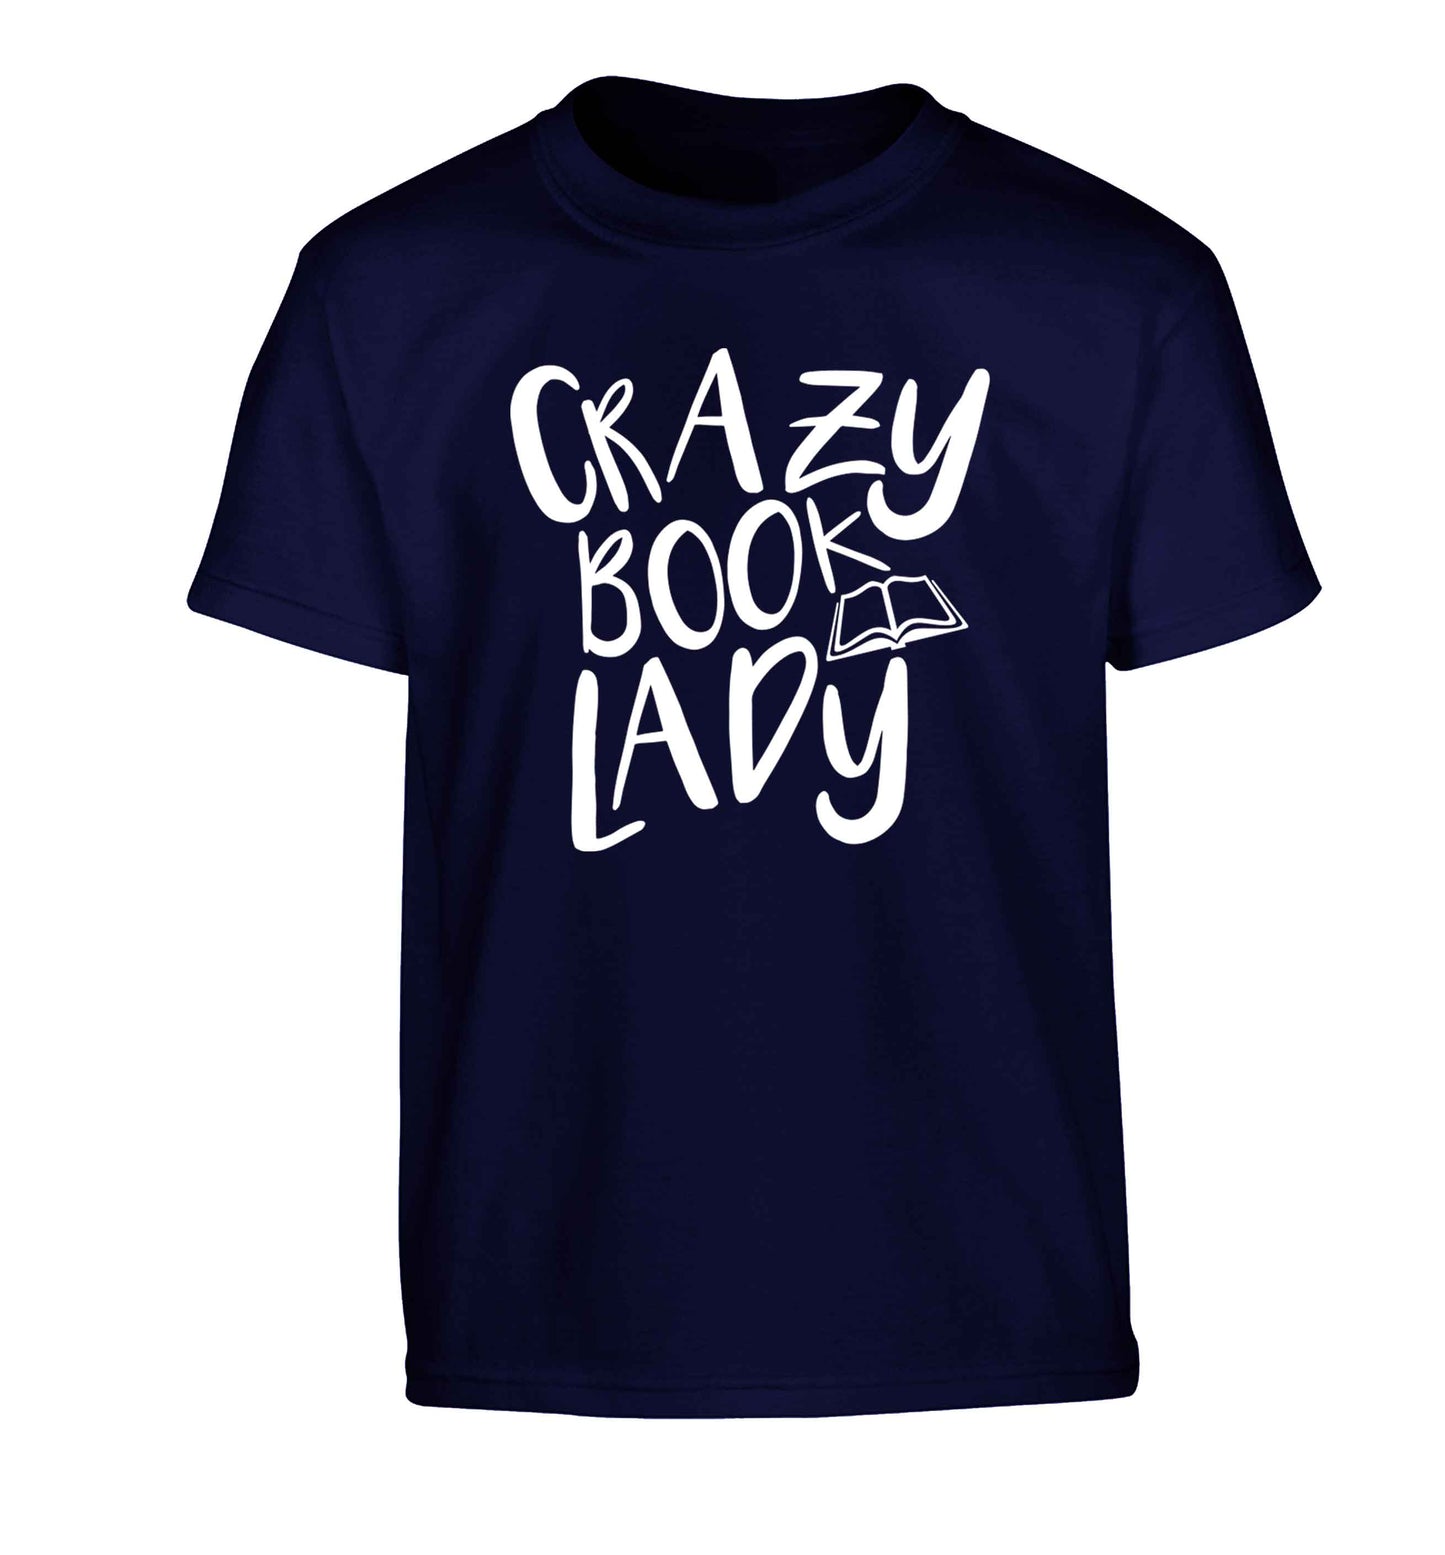 Crazy book lady Children's navy Tshirt 12-13 Years